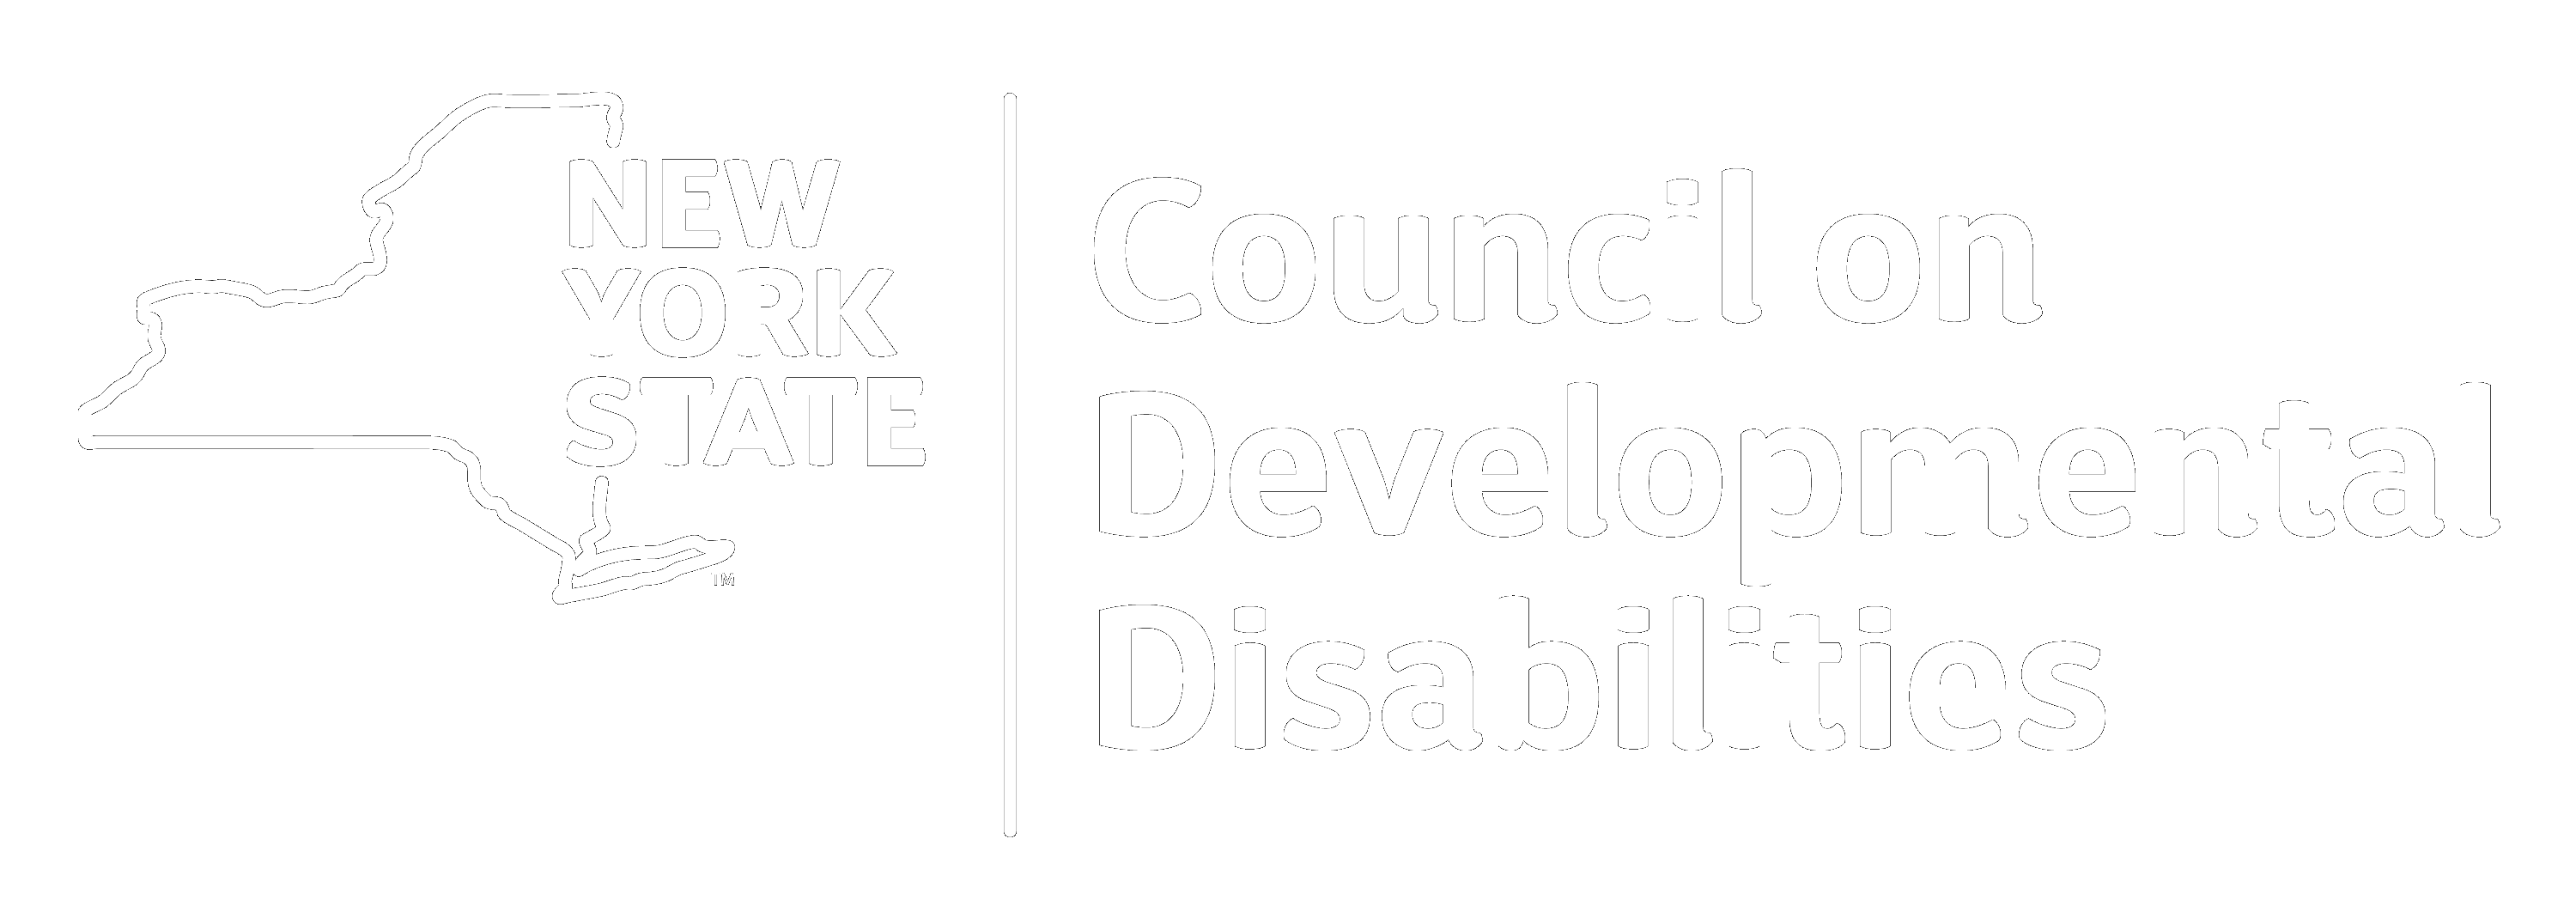 New York State Council on Developmental Disabilities logo